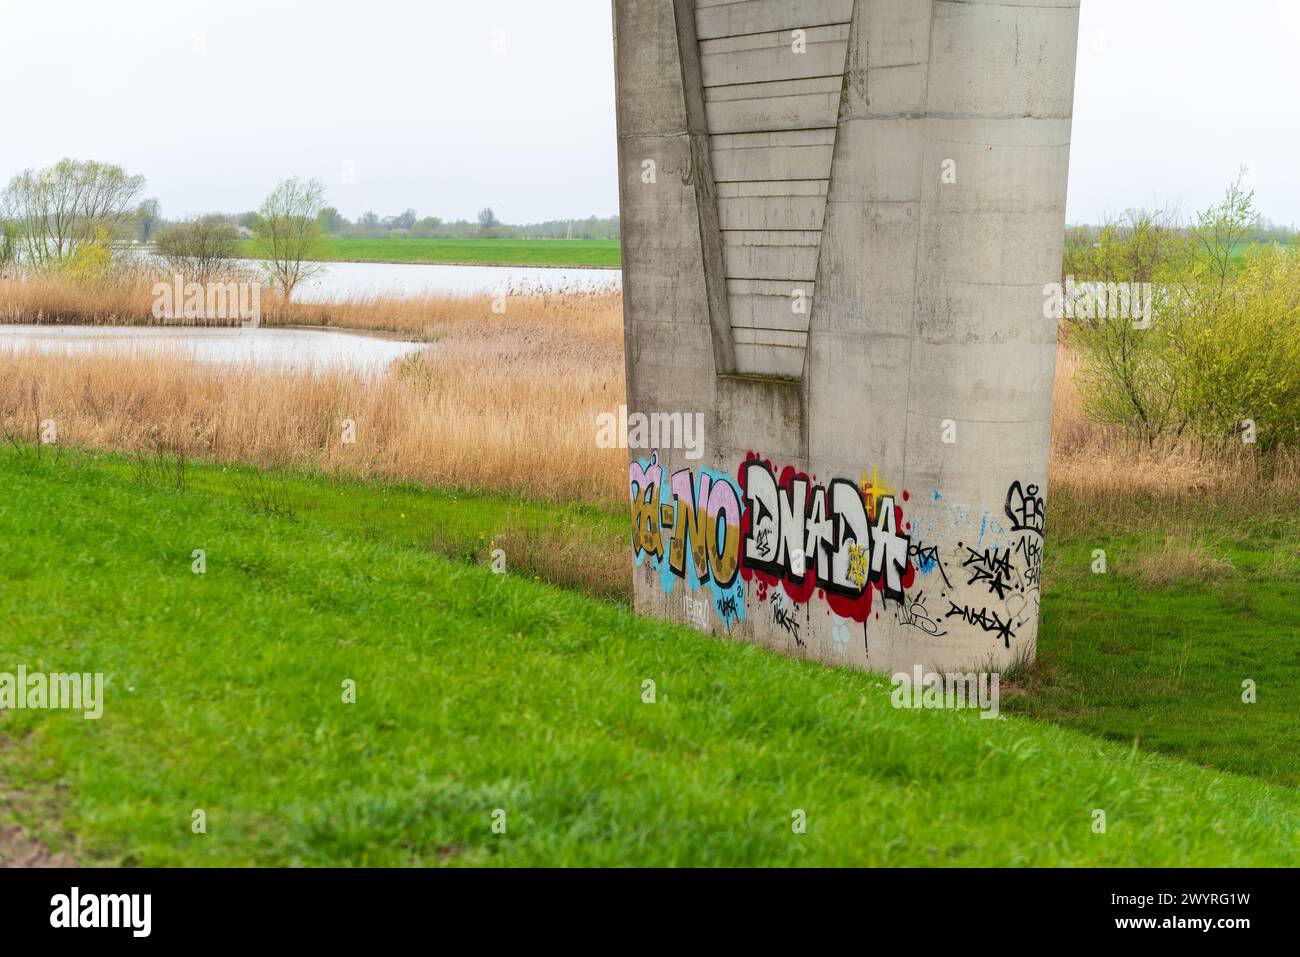 graffiti on a concrete bridge pillar Stock Photo